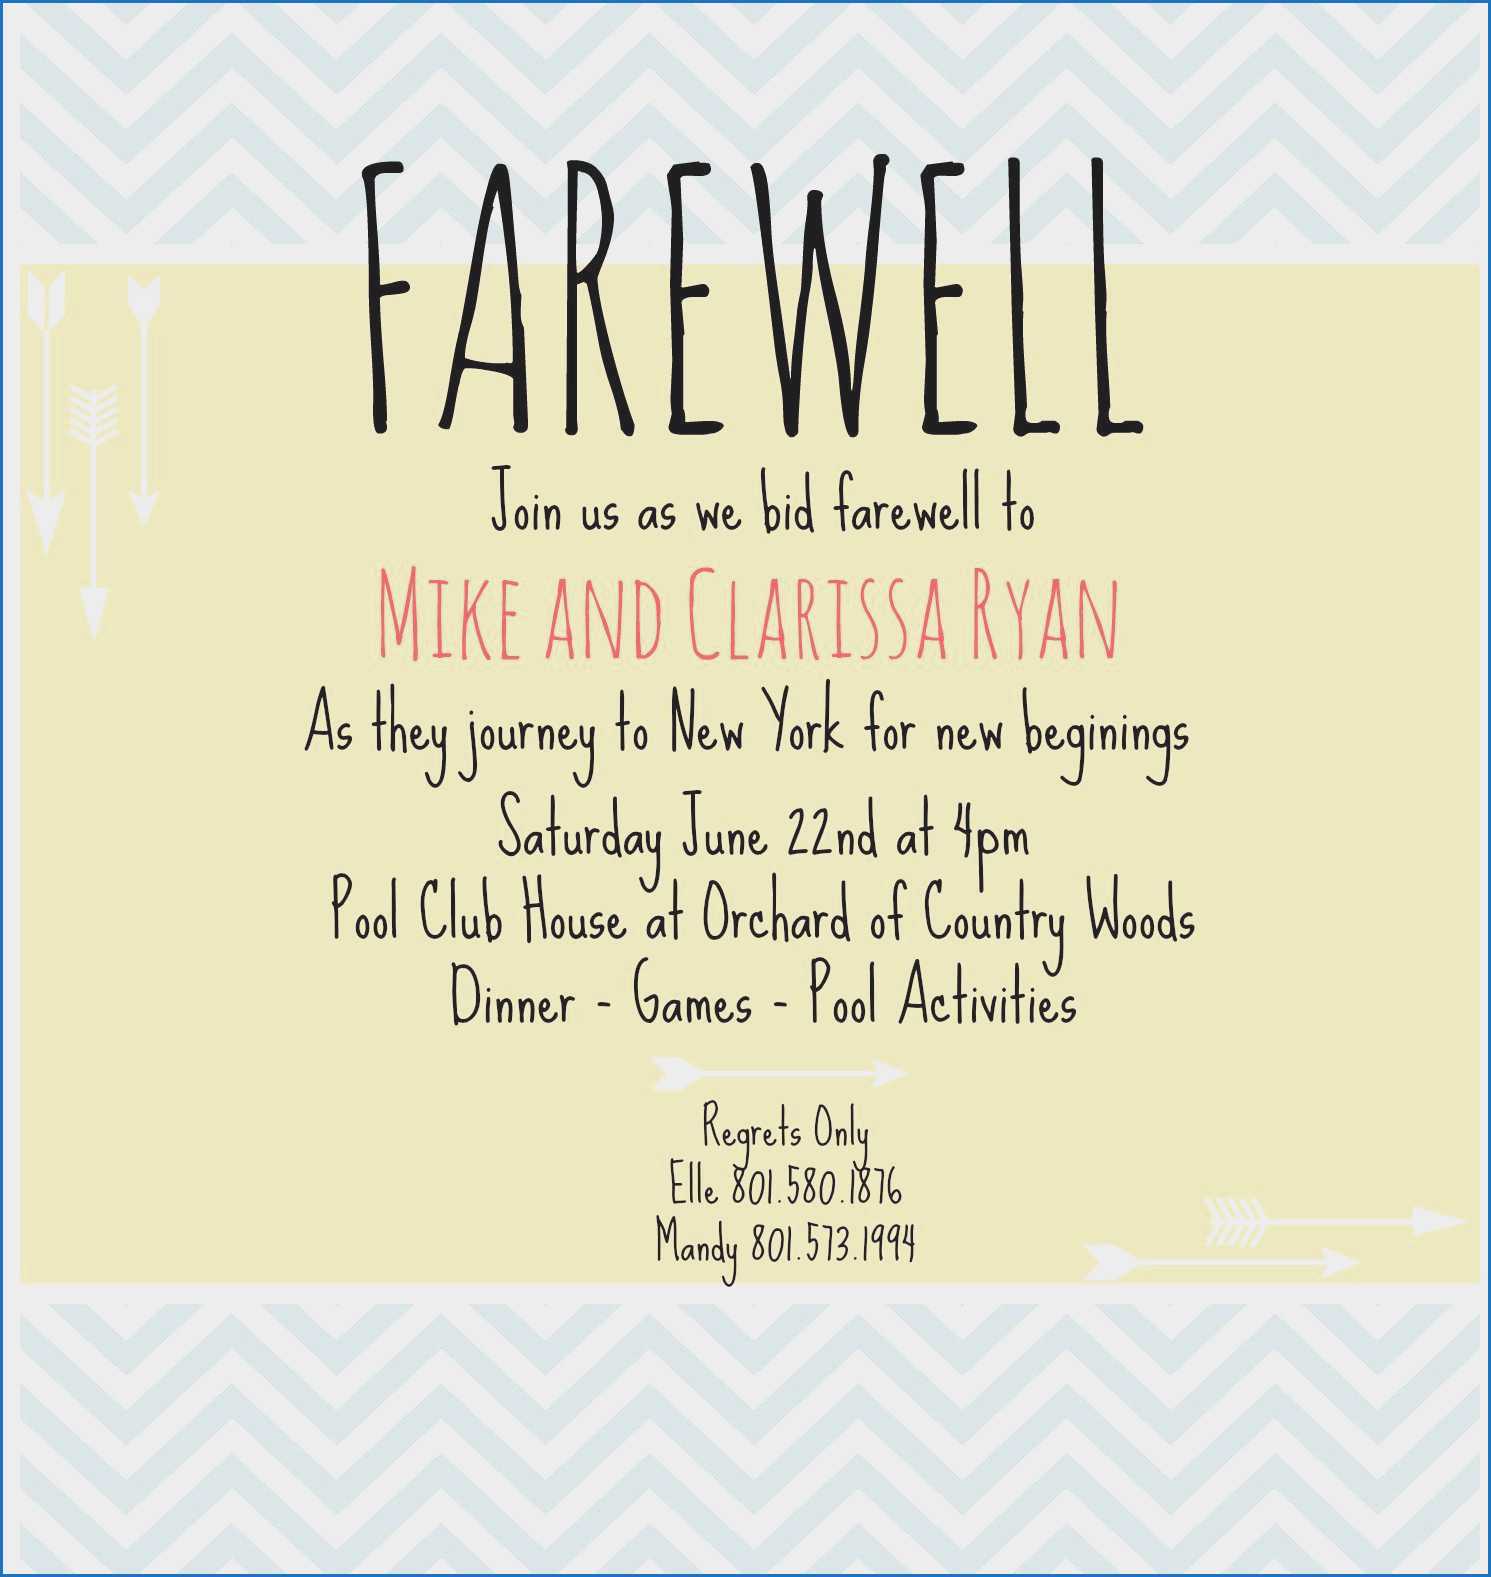 757 Free Farewell Invitation Template Word – Invitations Regarding Farewell Card Template Word